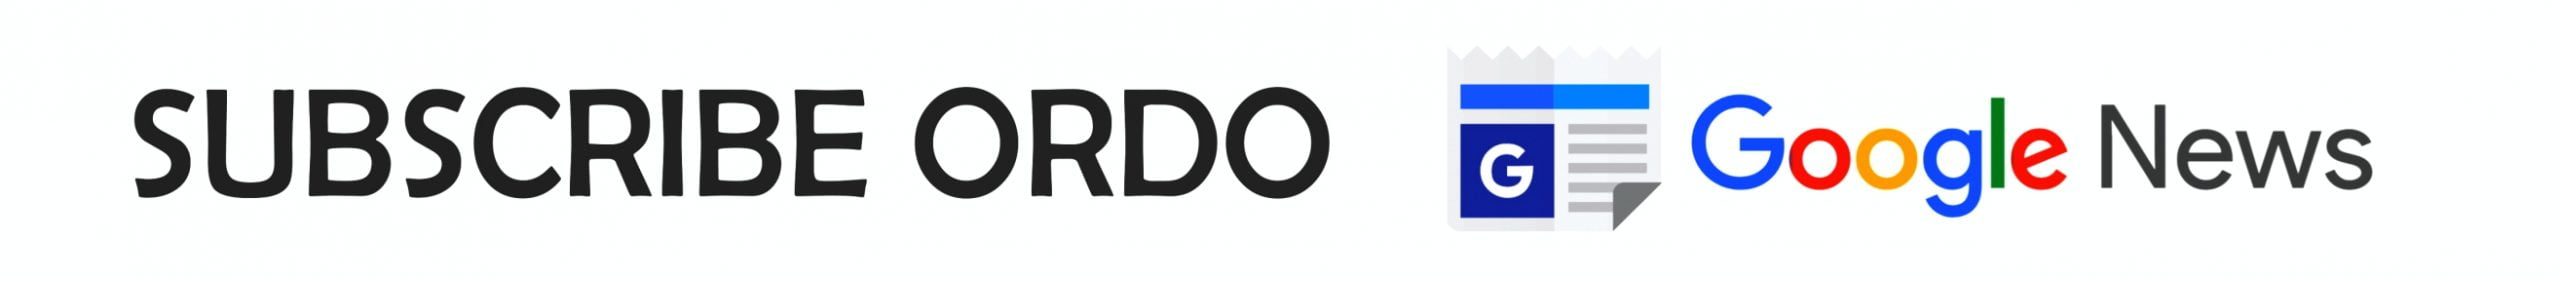 Subscribe ORDO on Google News